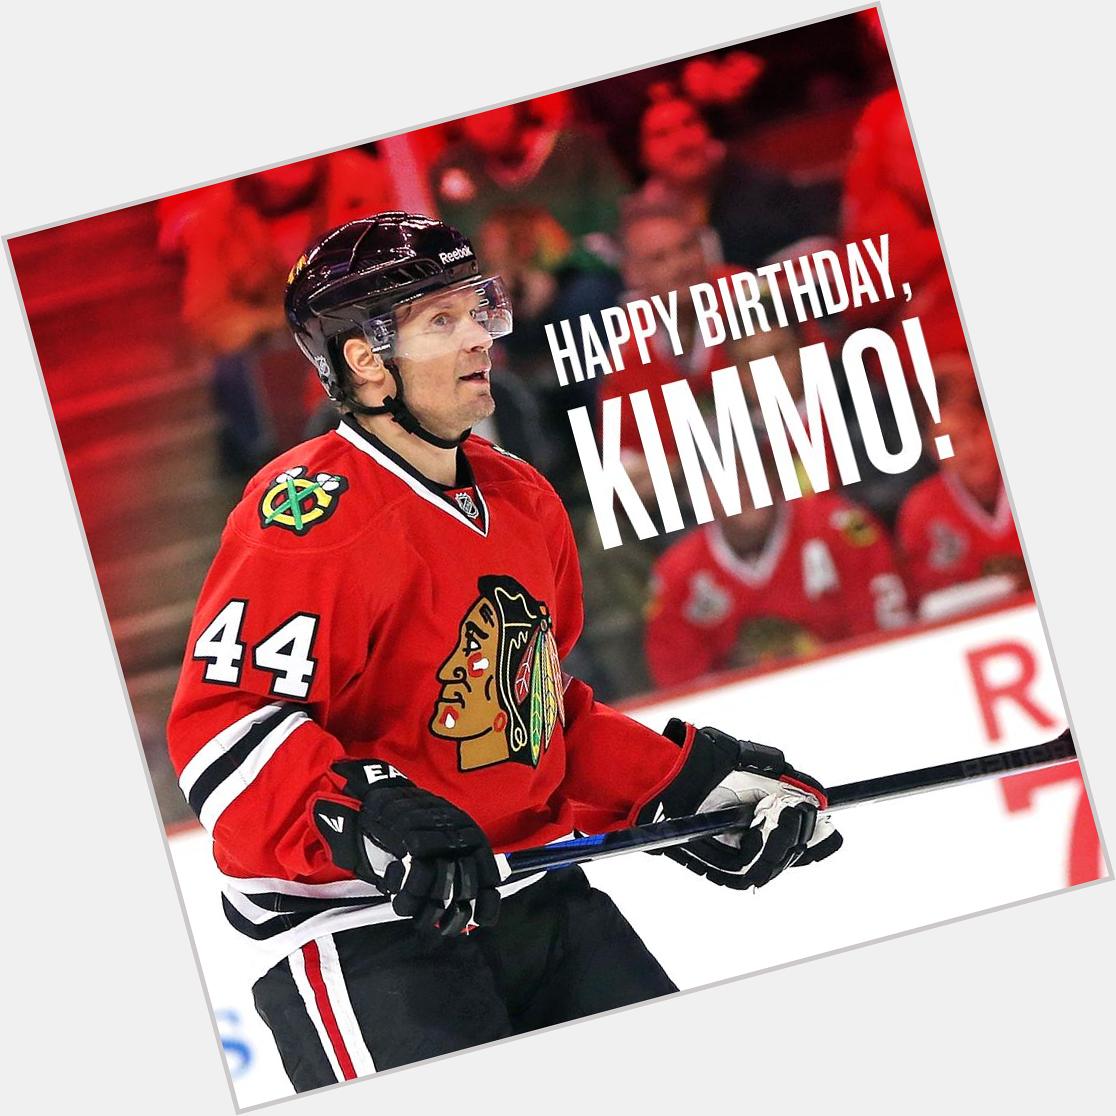   It\s Kimmo Timonen\s birthday! HBD, buddy.  HAPPY BIRTHDAY 